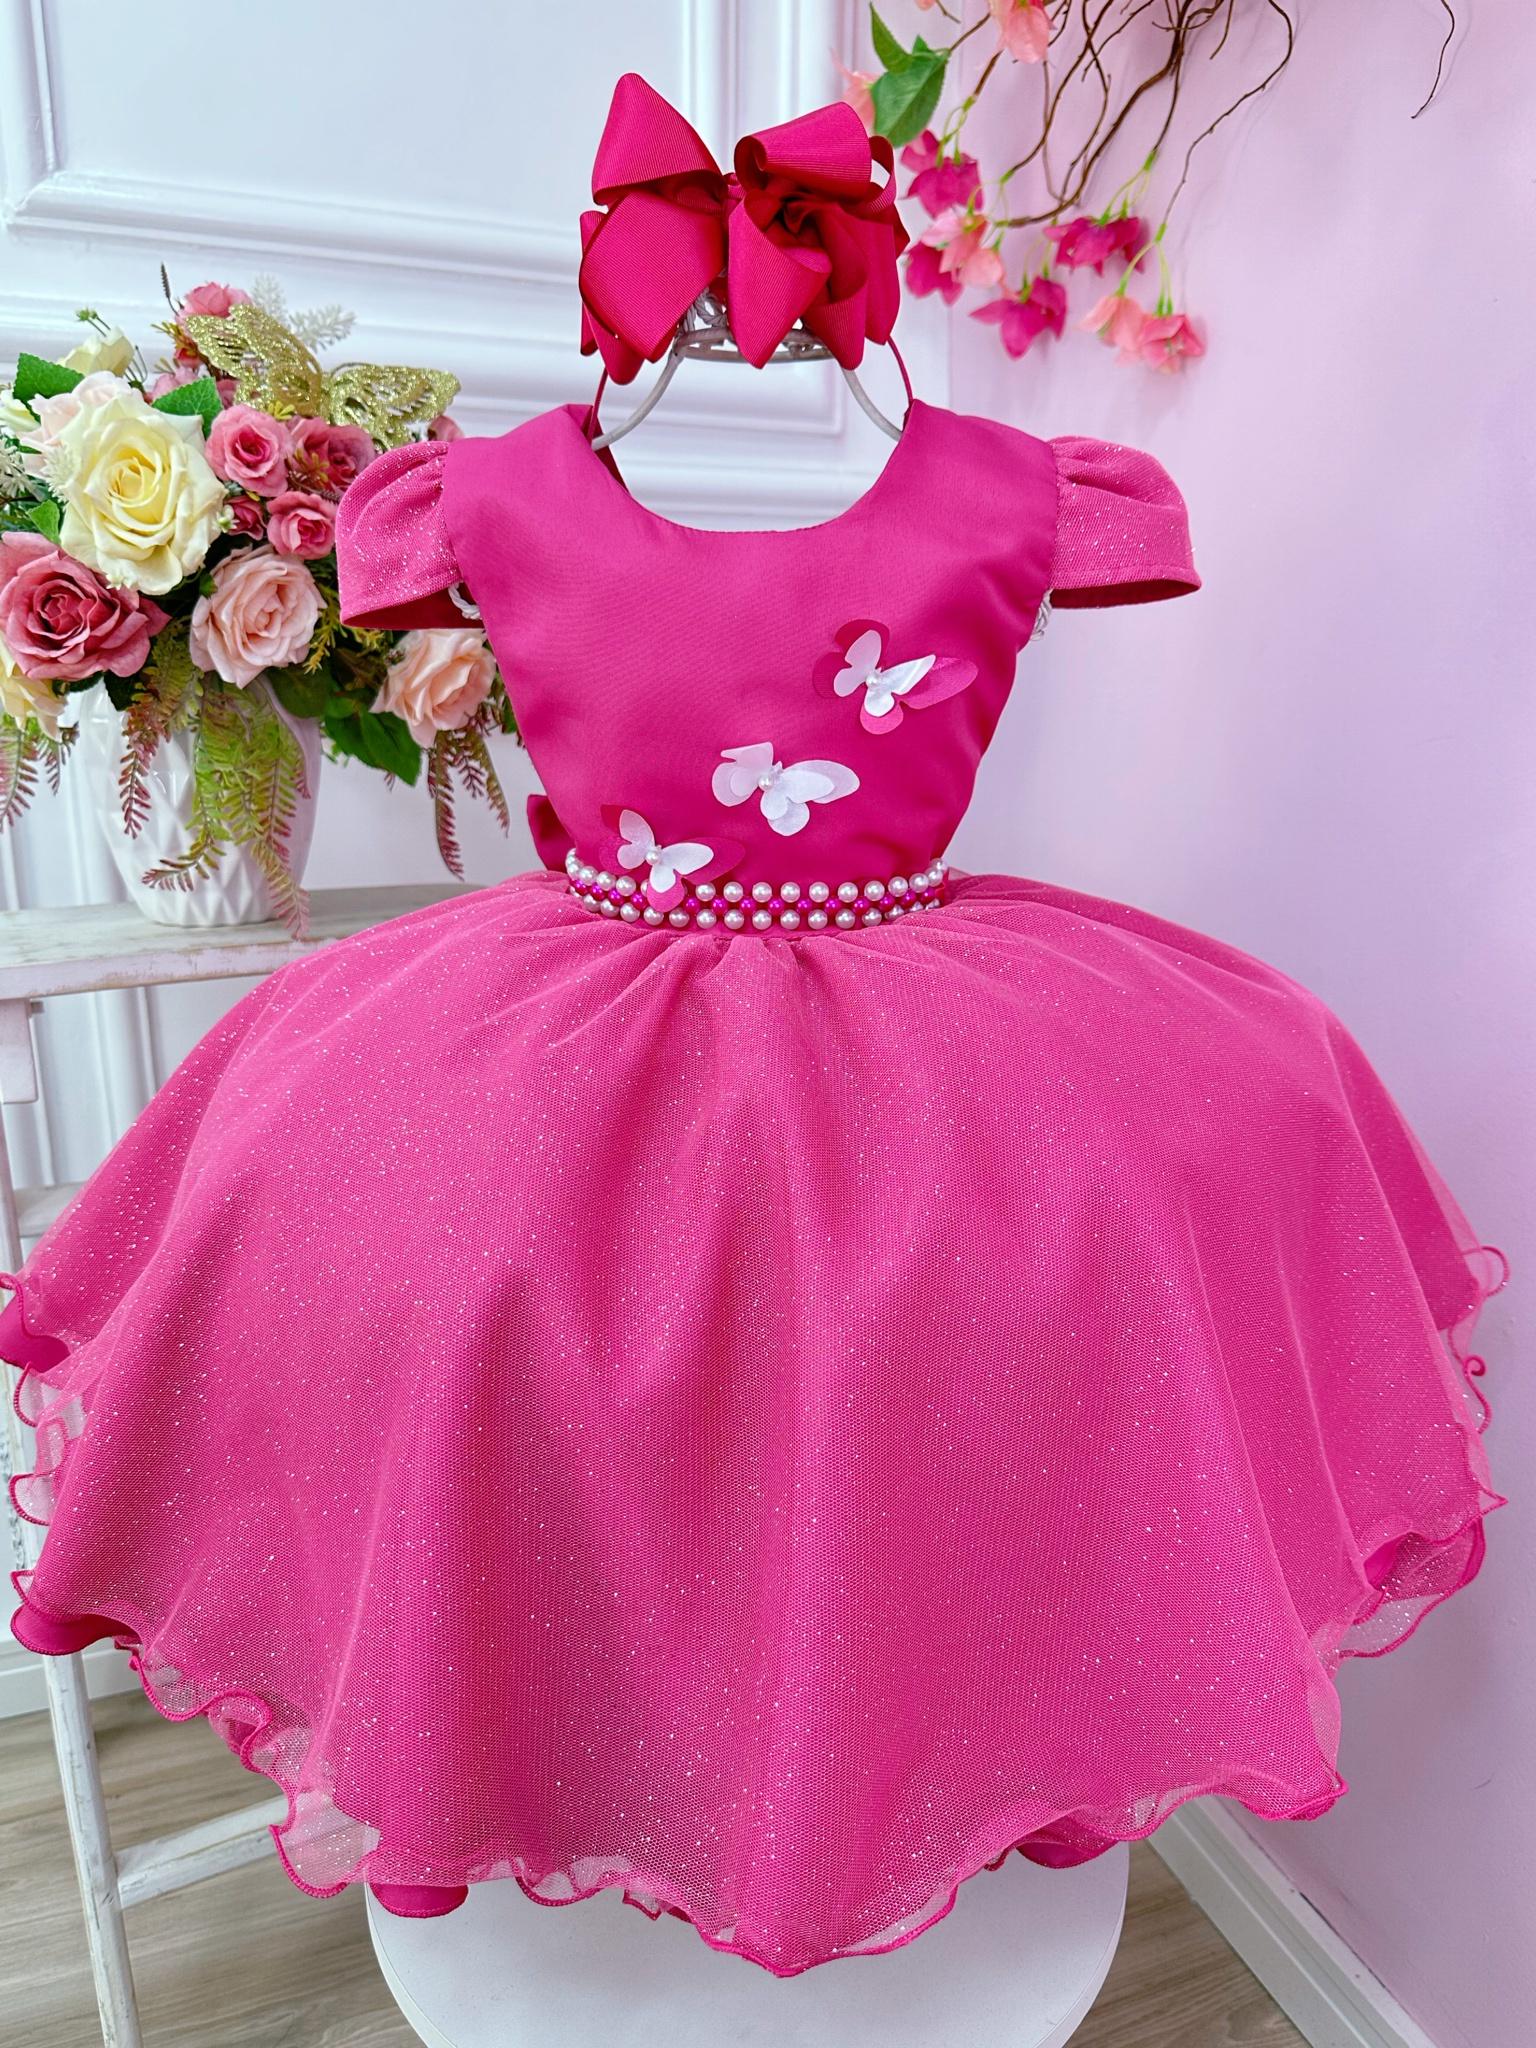 Vestido Infantil Pink C/ Glitter e Aplique de Borboletas